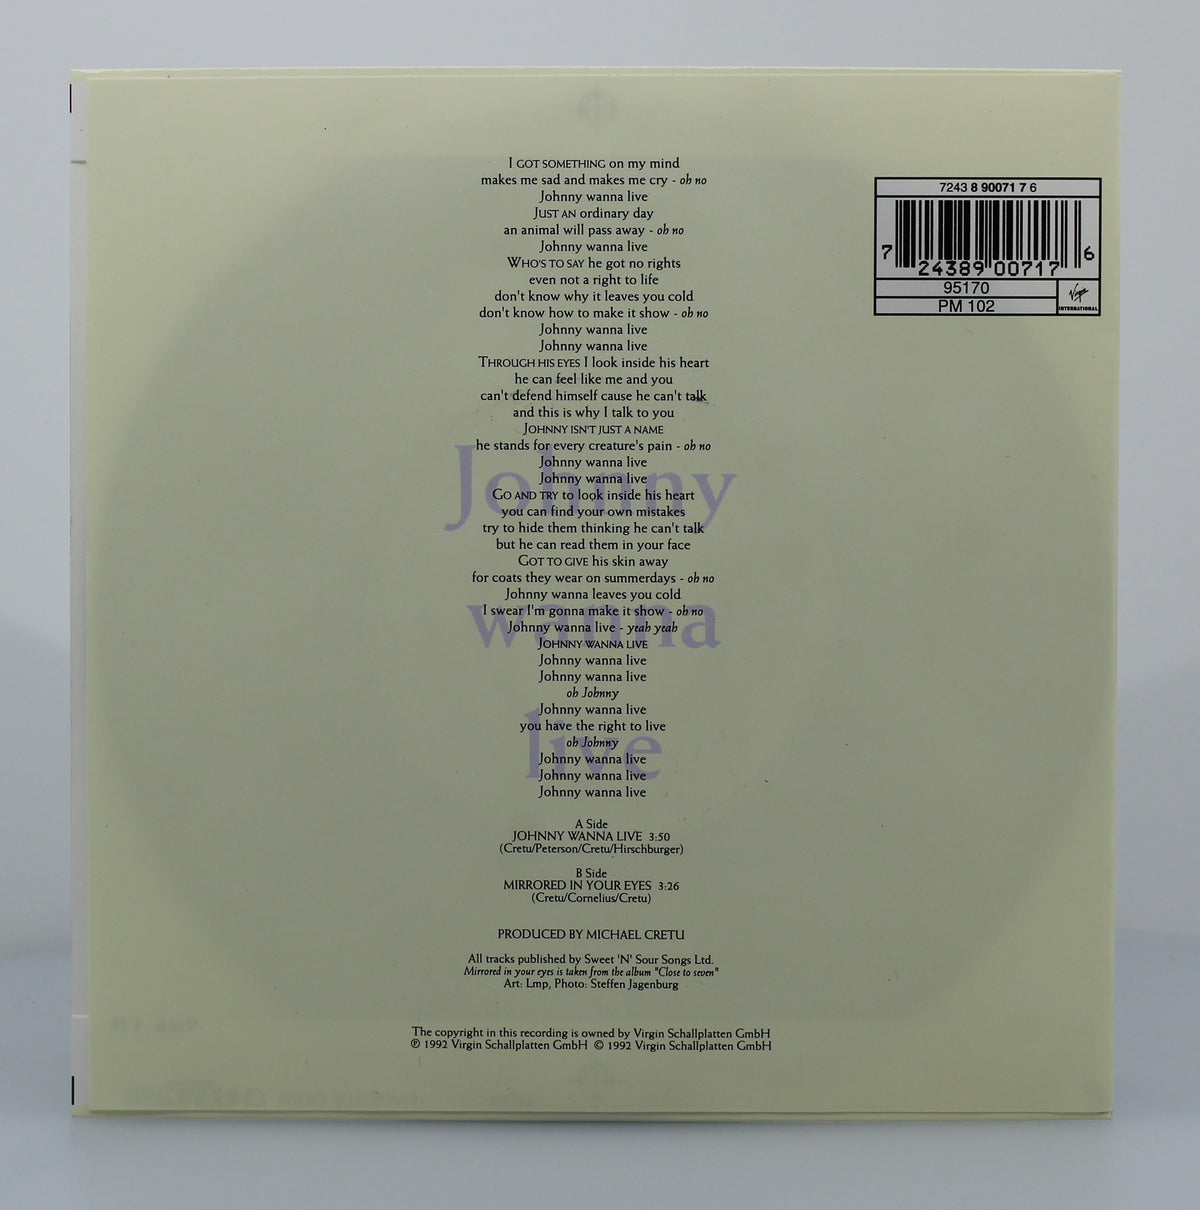 Sandra – Johnny Wanna Live, Vinyl, 7&quot;, 45 RPM, Single, France 1992